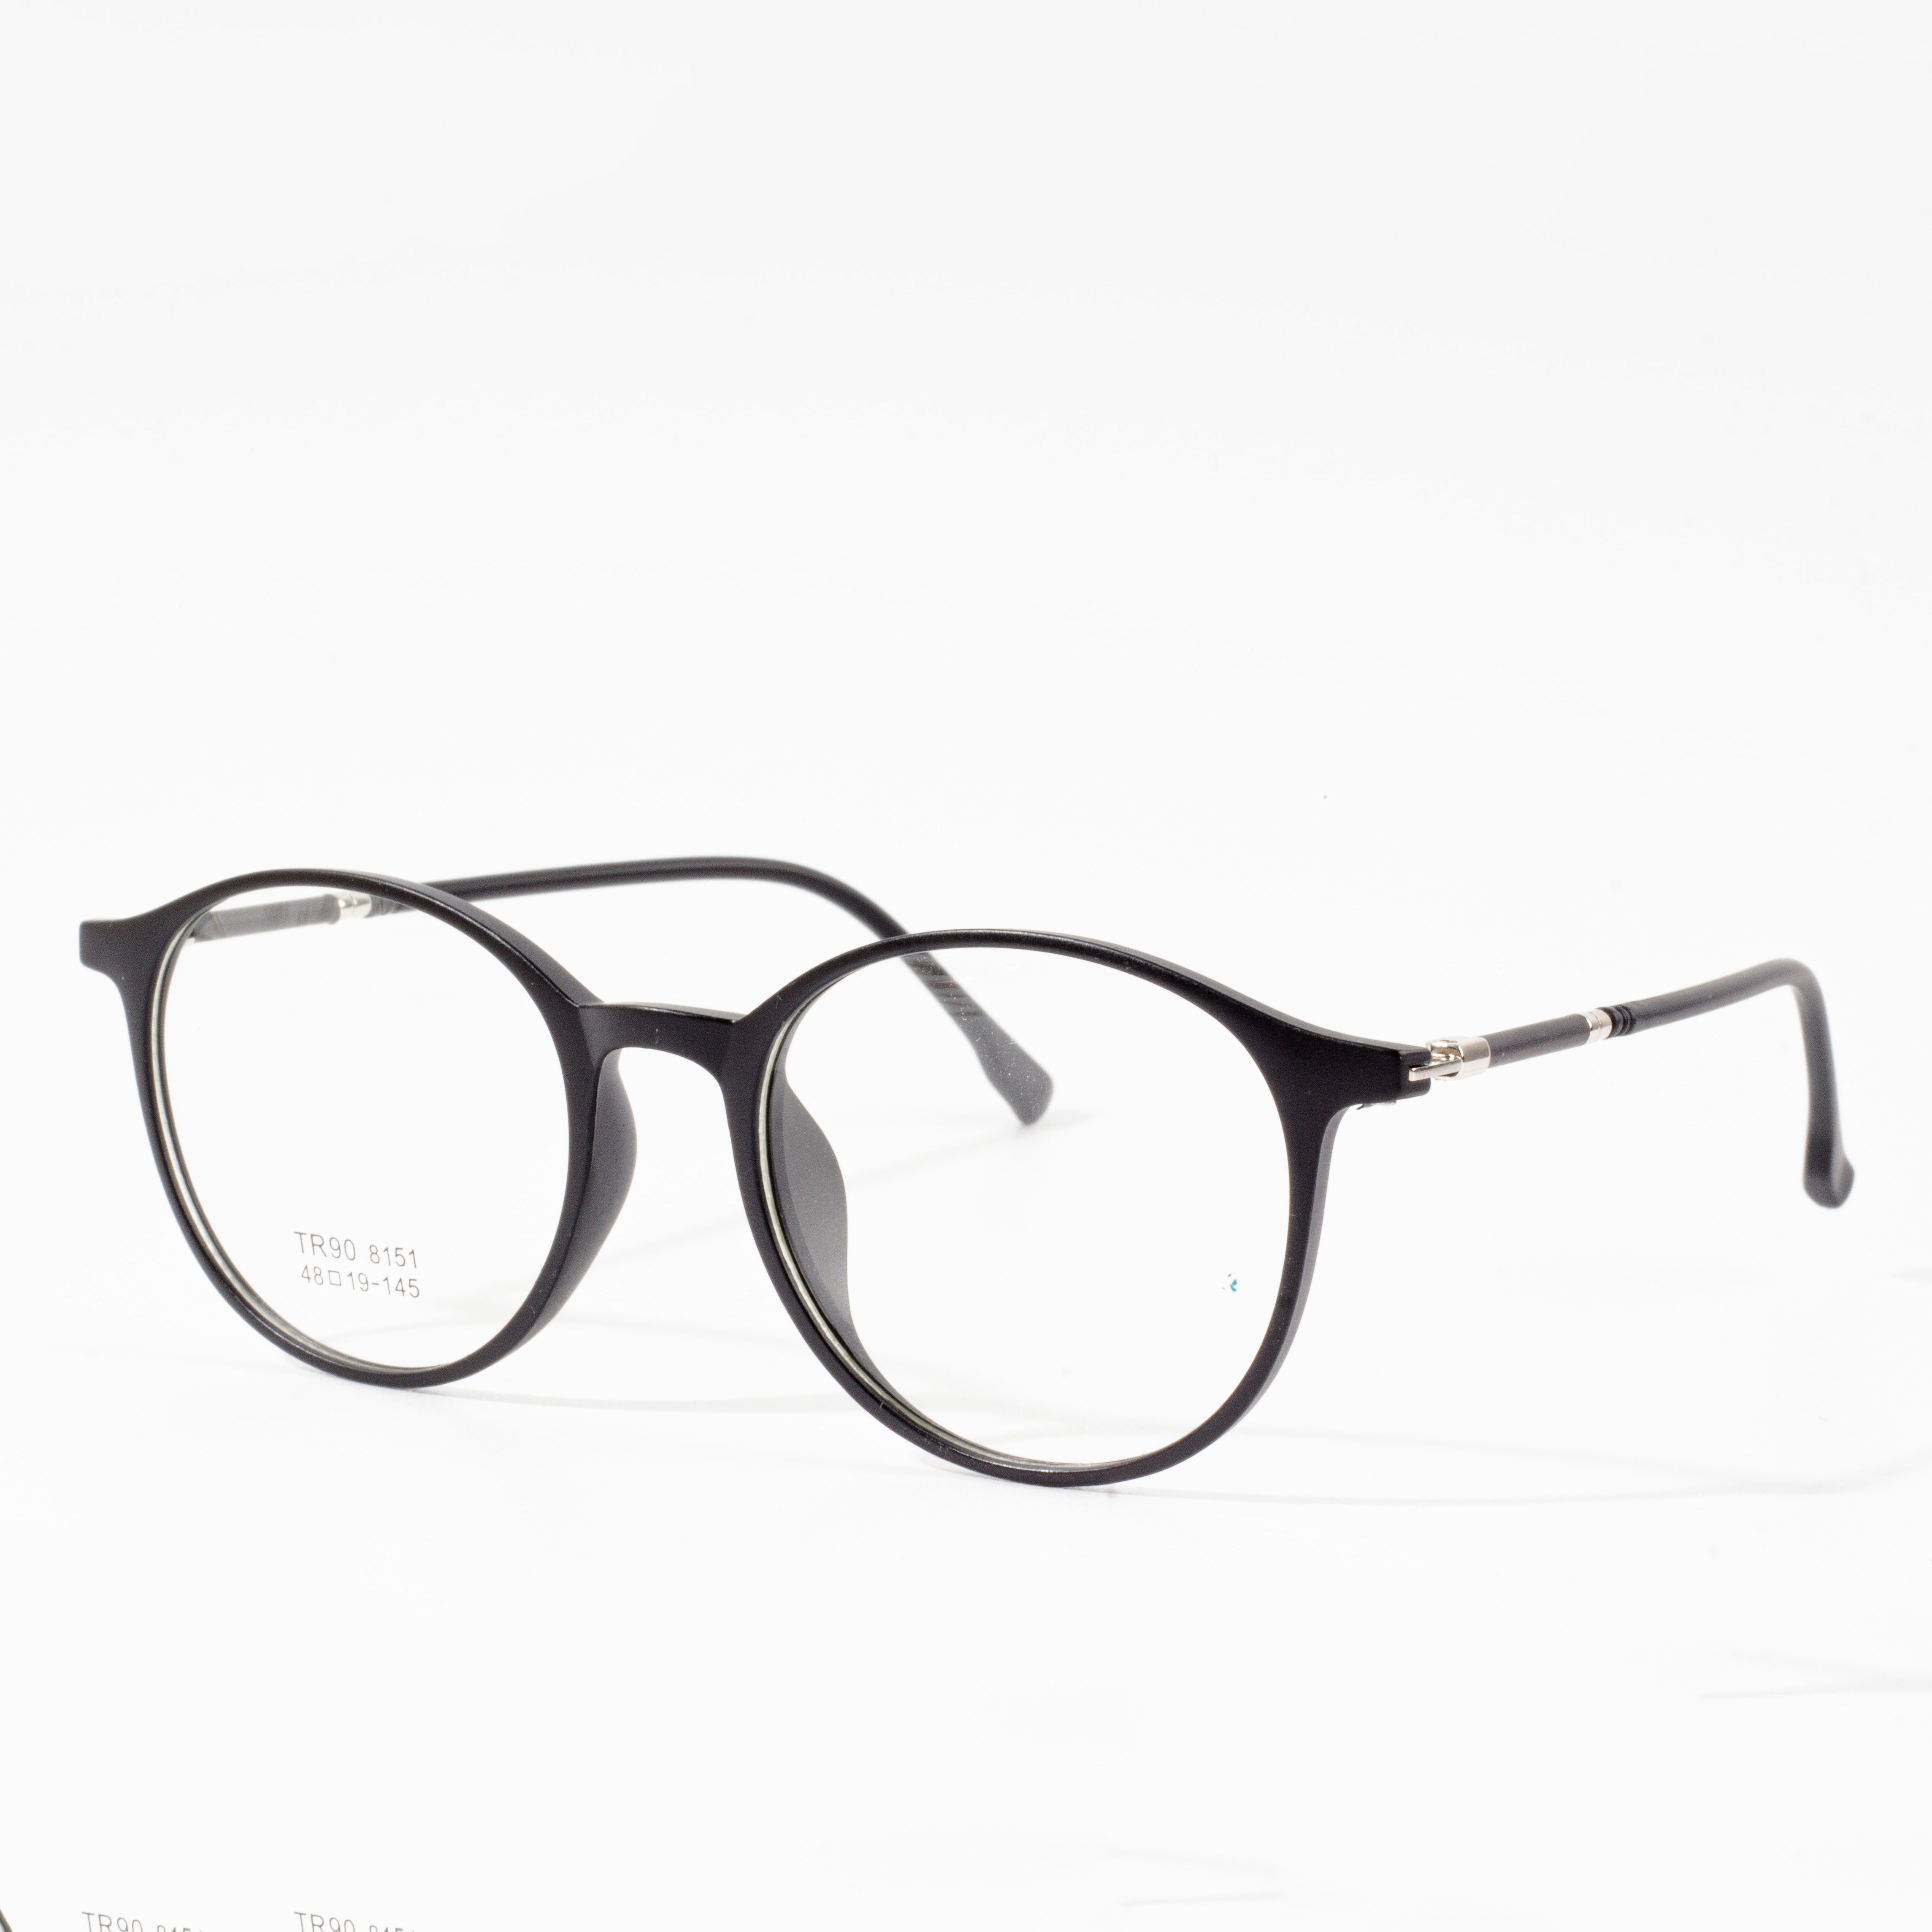 Ир-атлар һәм хатын-кызлар дизайнер рамкалары - Eyeglasses.com 广告 · https://www.eyeglasses.com/ (888) 896-3885 Кибет дизайнеры рамкалары бүгенге көндә ваклап сату бәяләренең яртысы өчен иң яхшы глобаль күзлек брендларыннан.